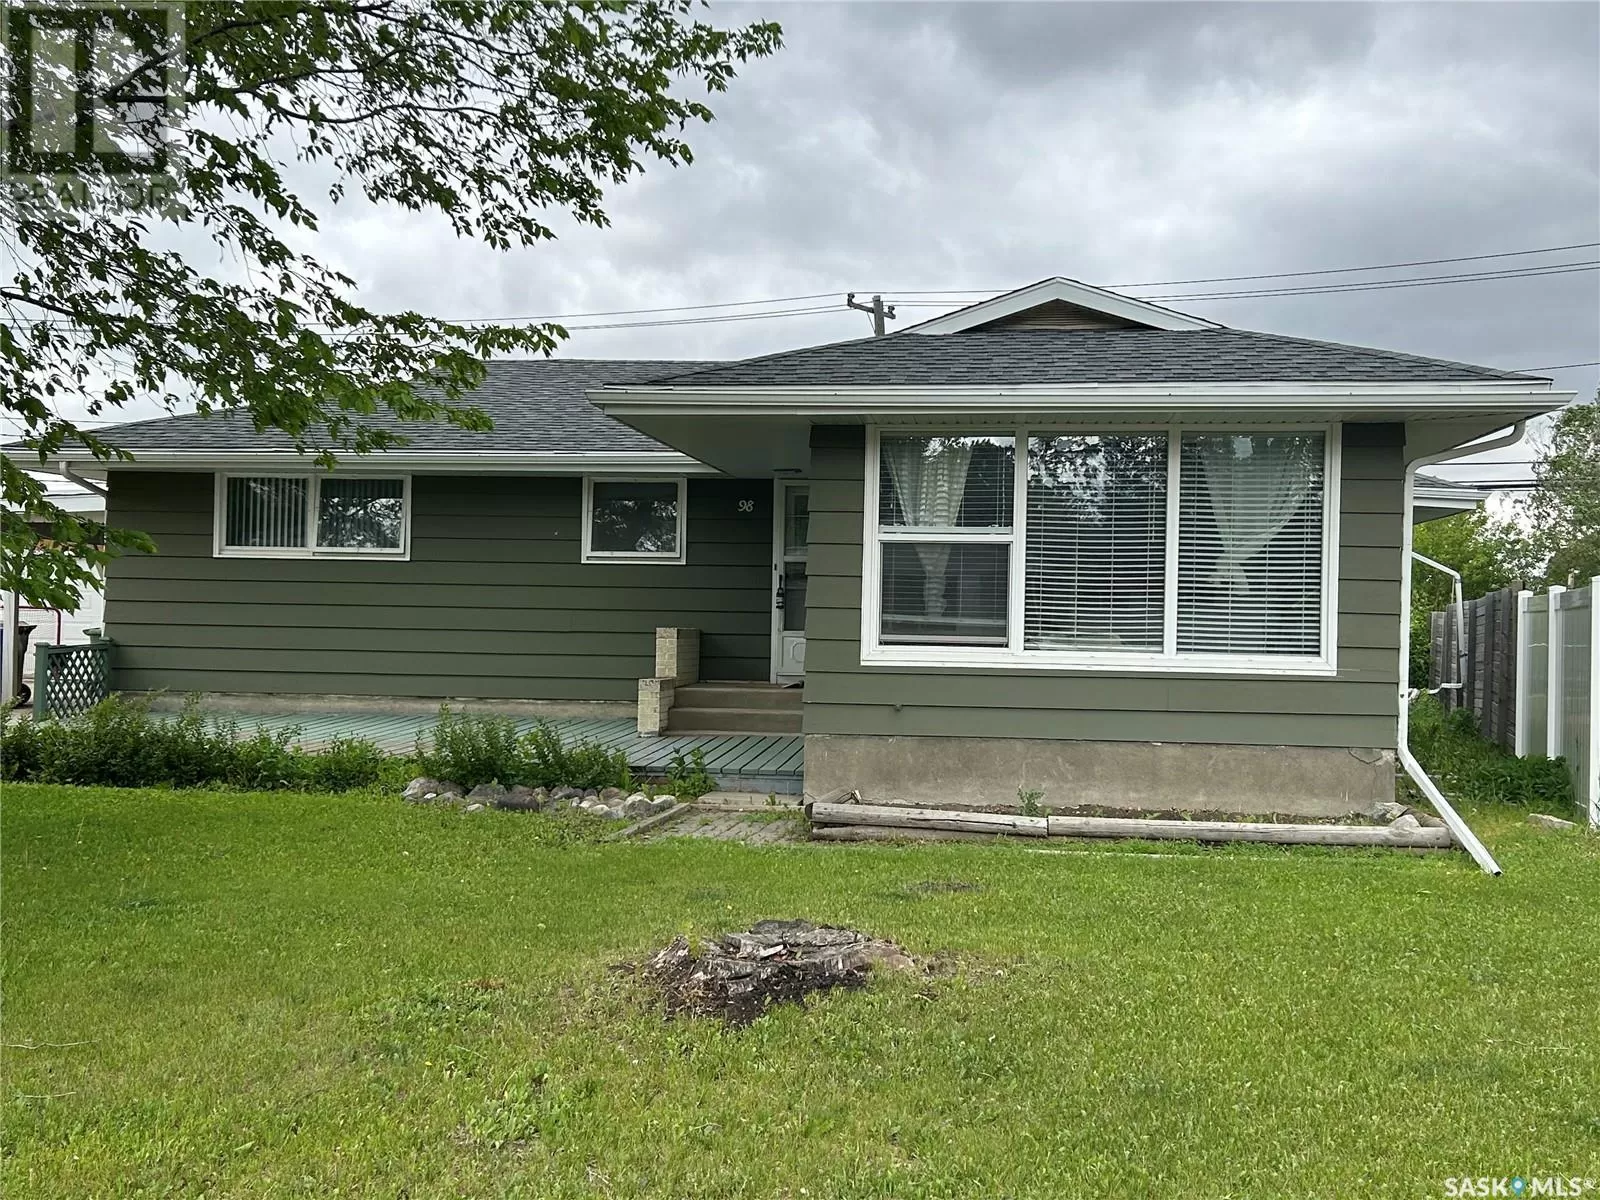 House for rent: 98 Millar Crescent, Regina, Saskatchewan S4S 1N4